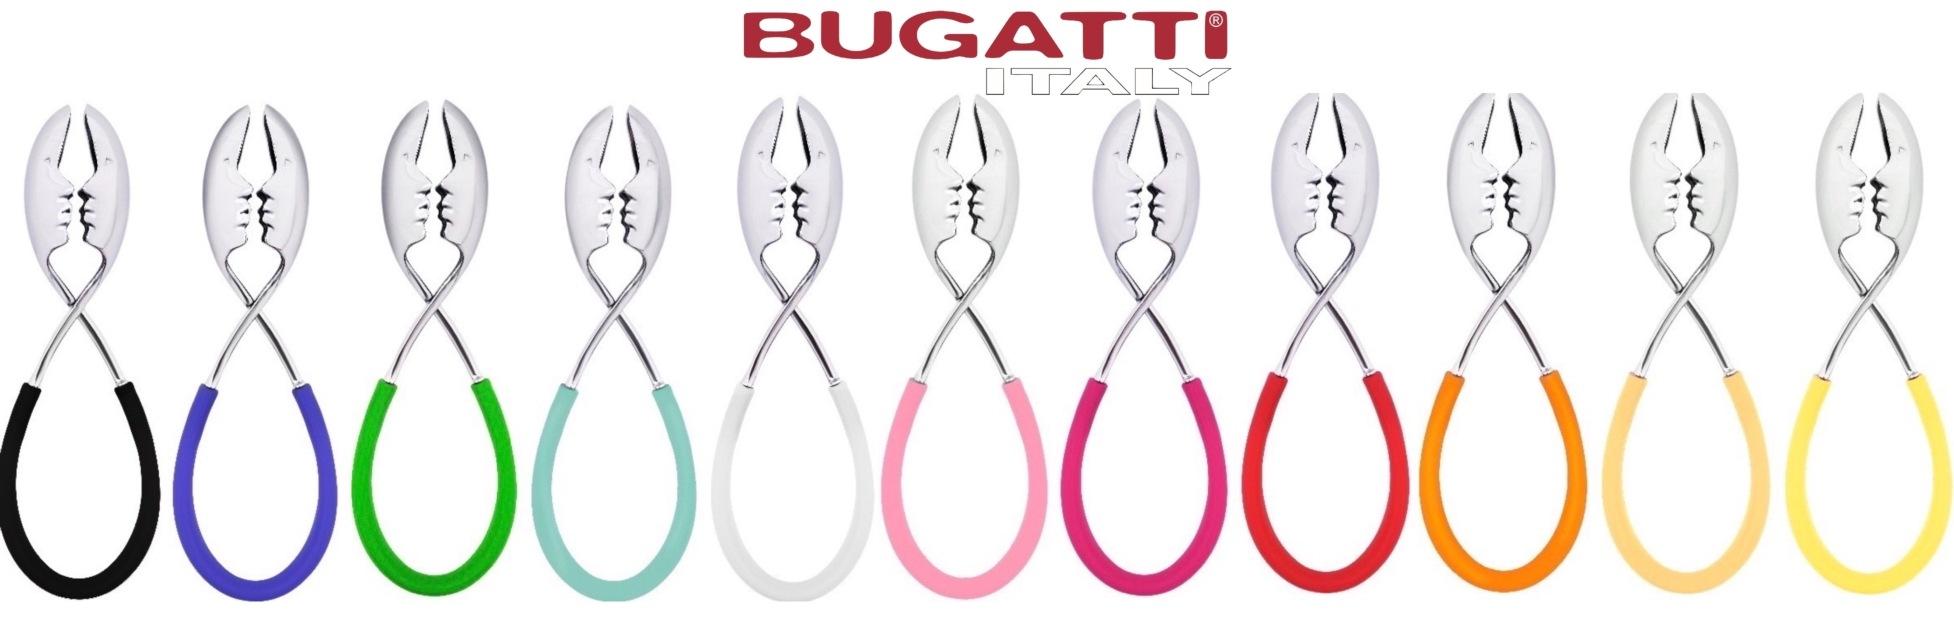 Bugatti Italy lifestyle products slide 3